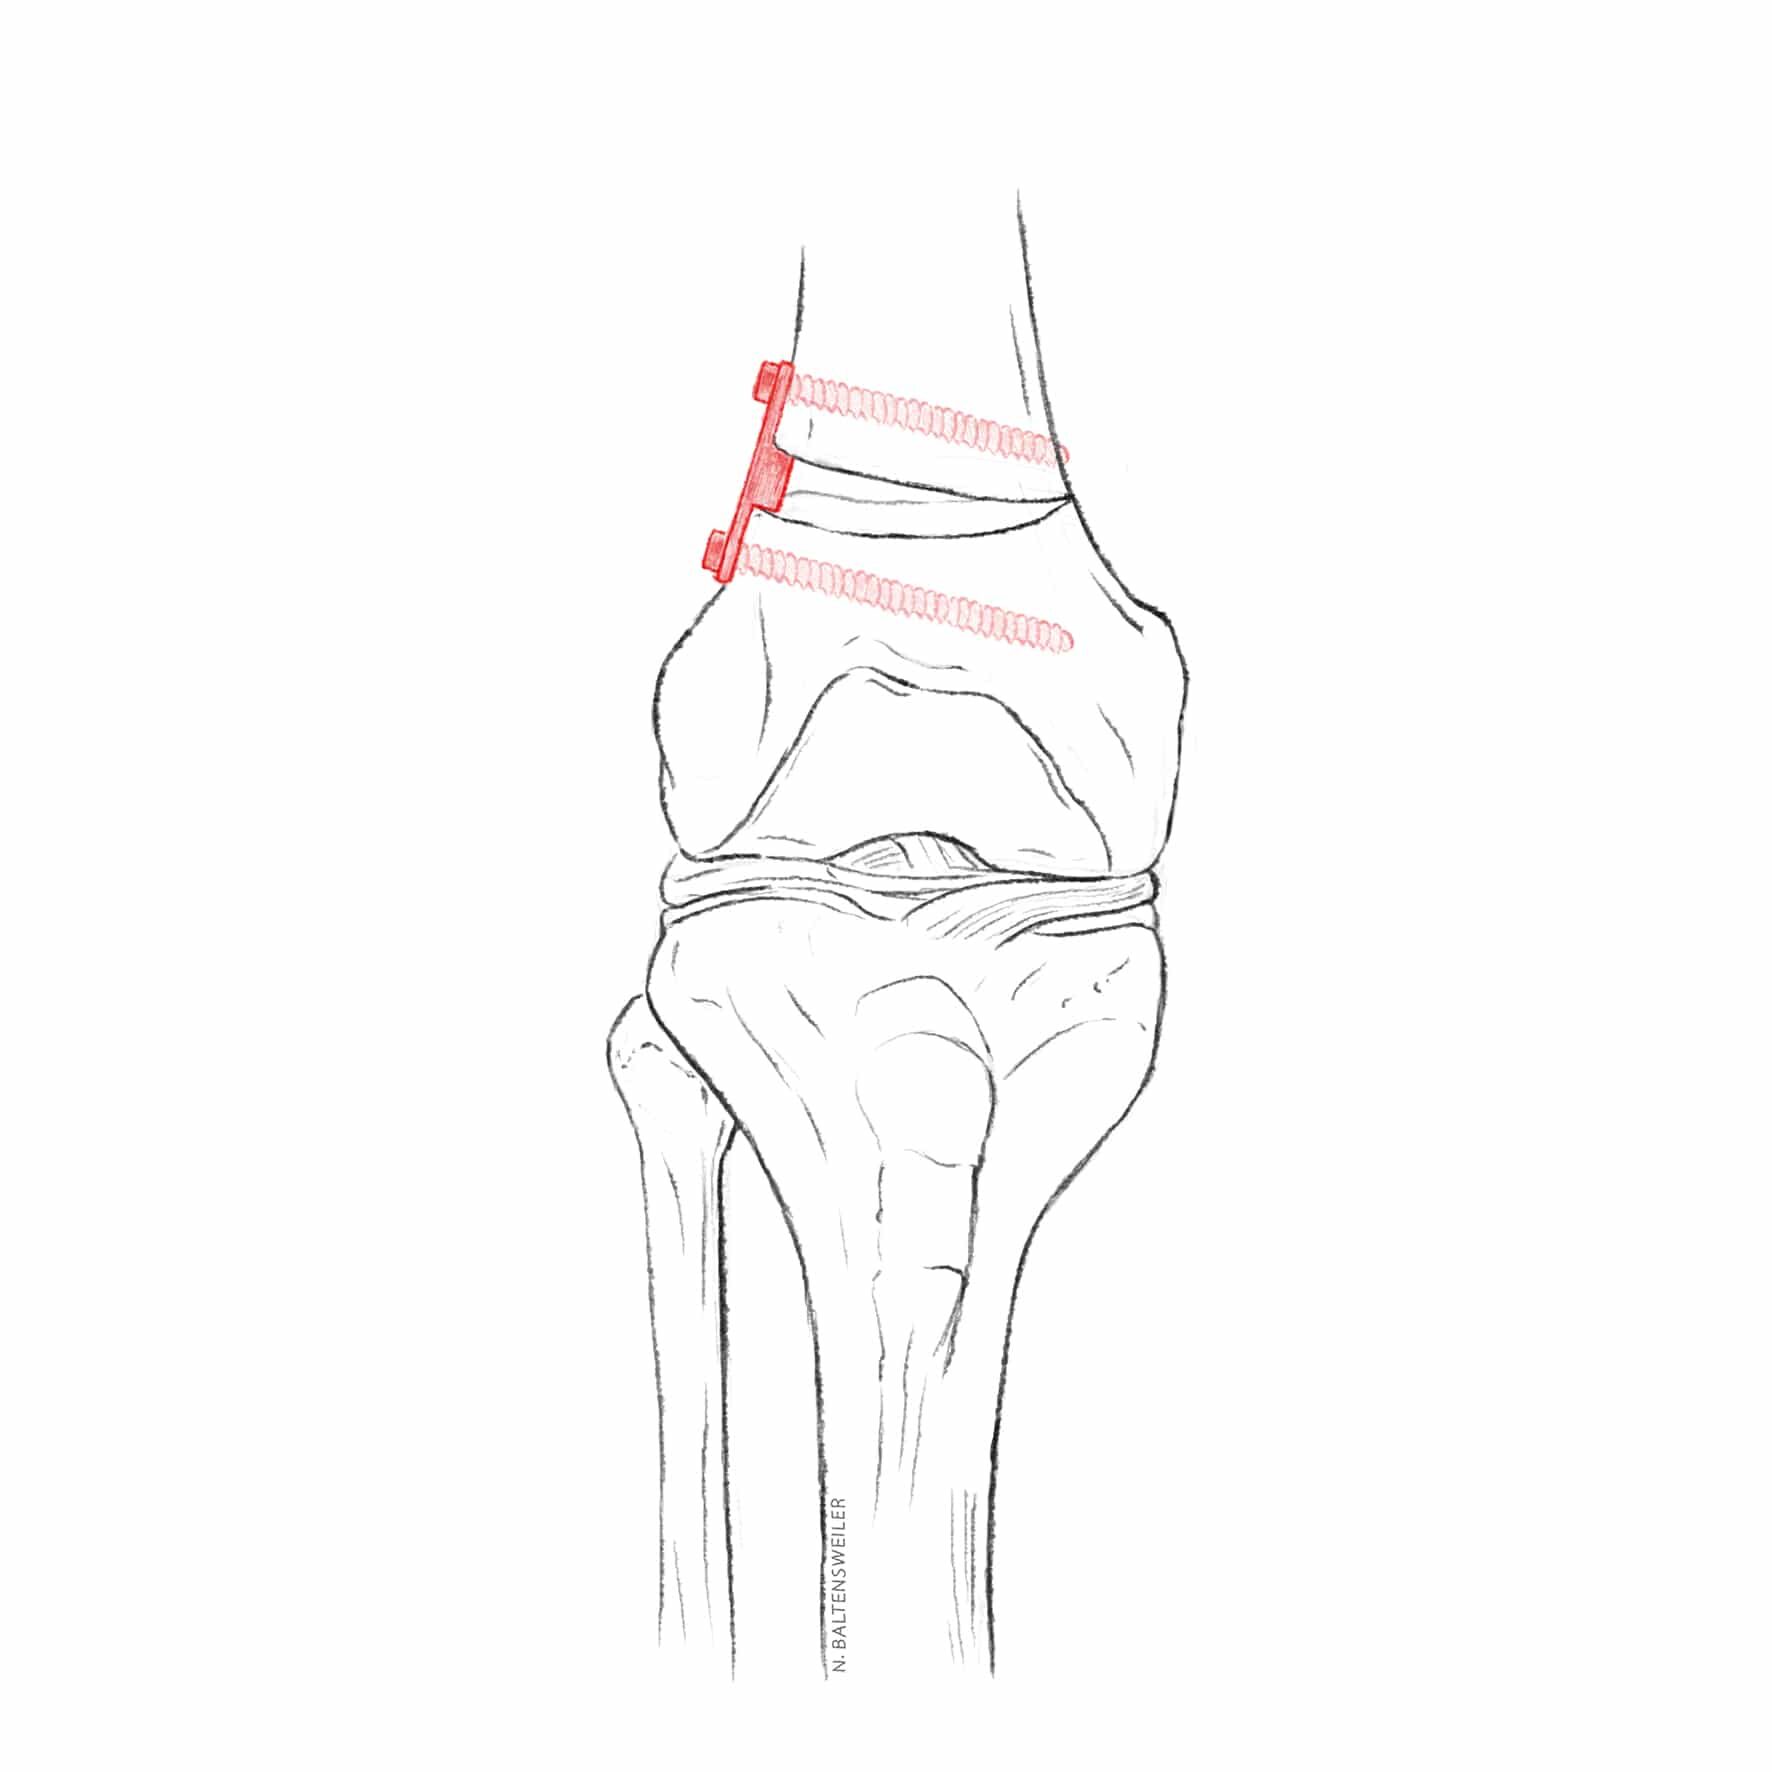 Suprakondyläre Femur-Osteotomie | Orthobudic